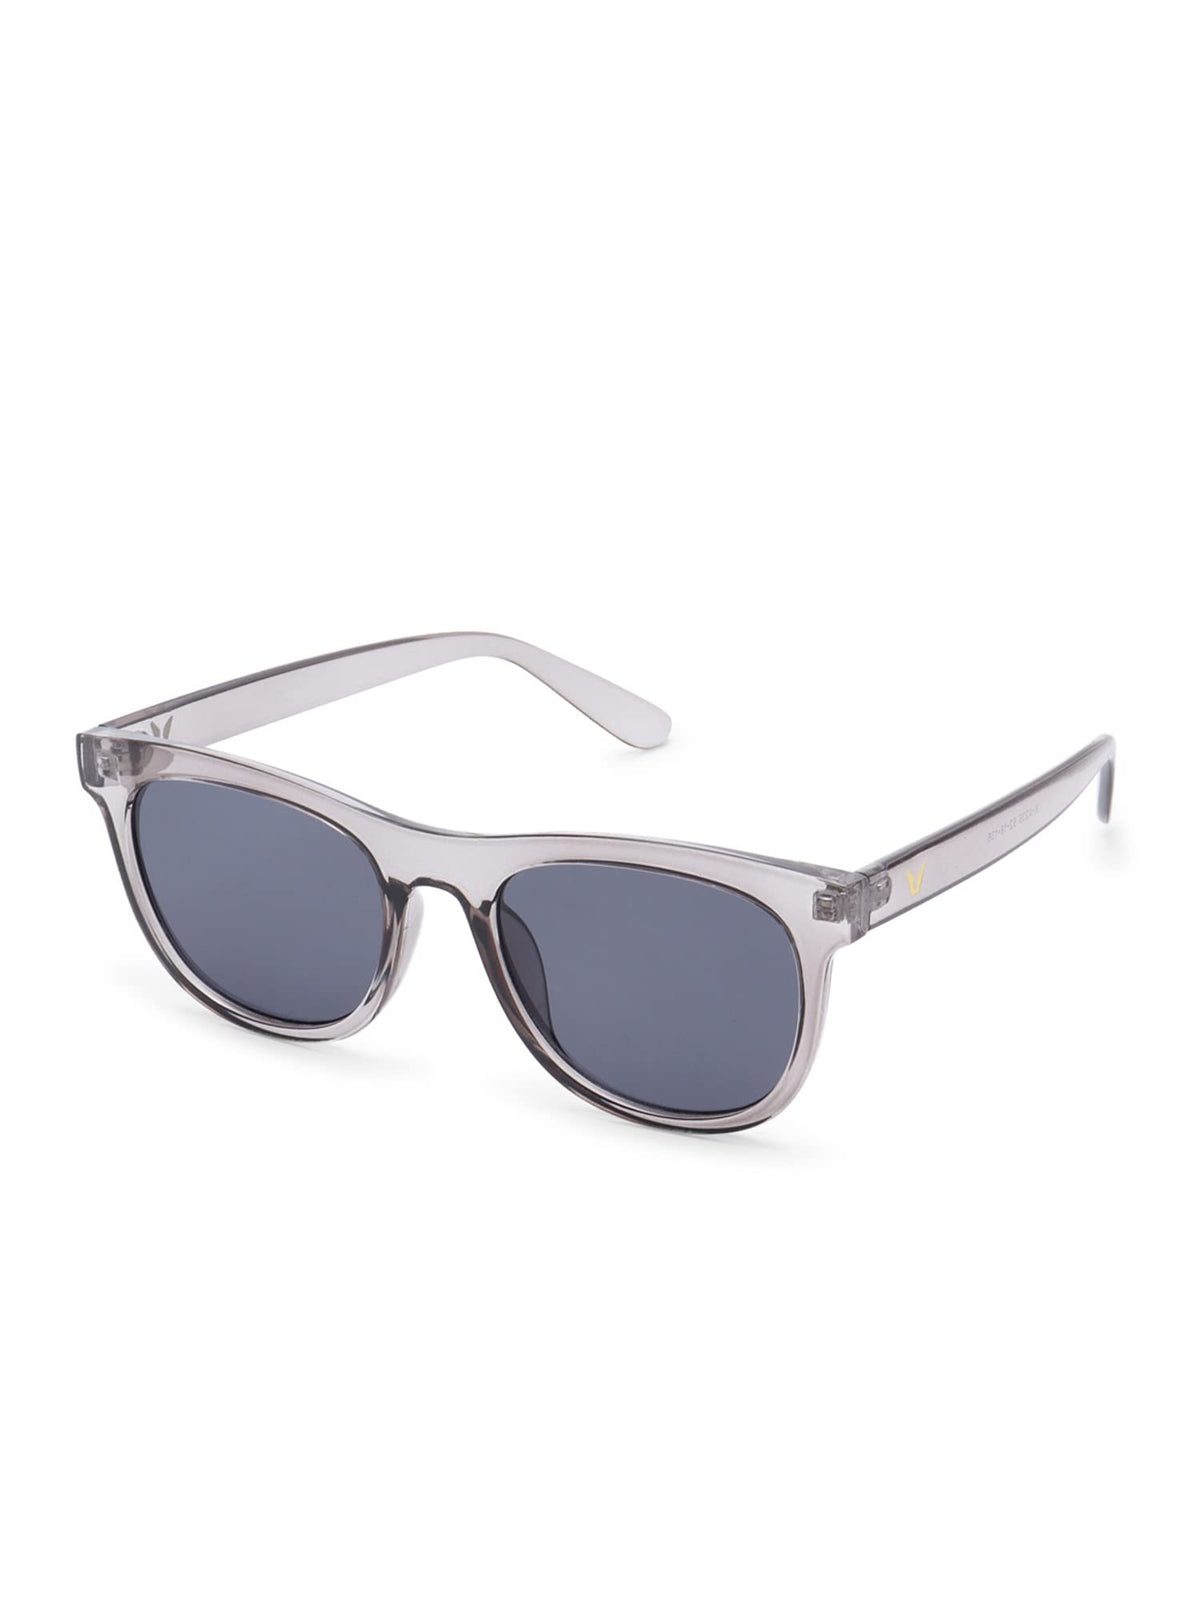 Intellilens | Branded Latest and Stylish Sunglasses | 100% UV Protected | Light Weight, Durable, Premium Looks | Women | Grey Lenses | Cateye | Medium